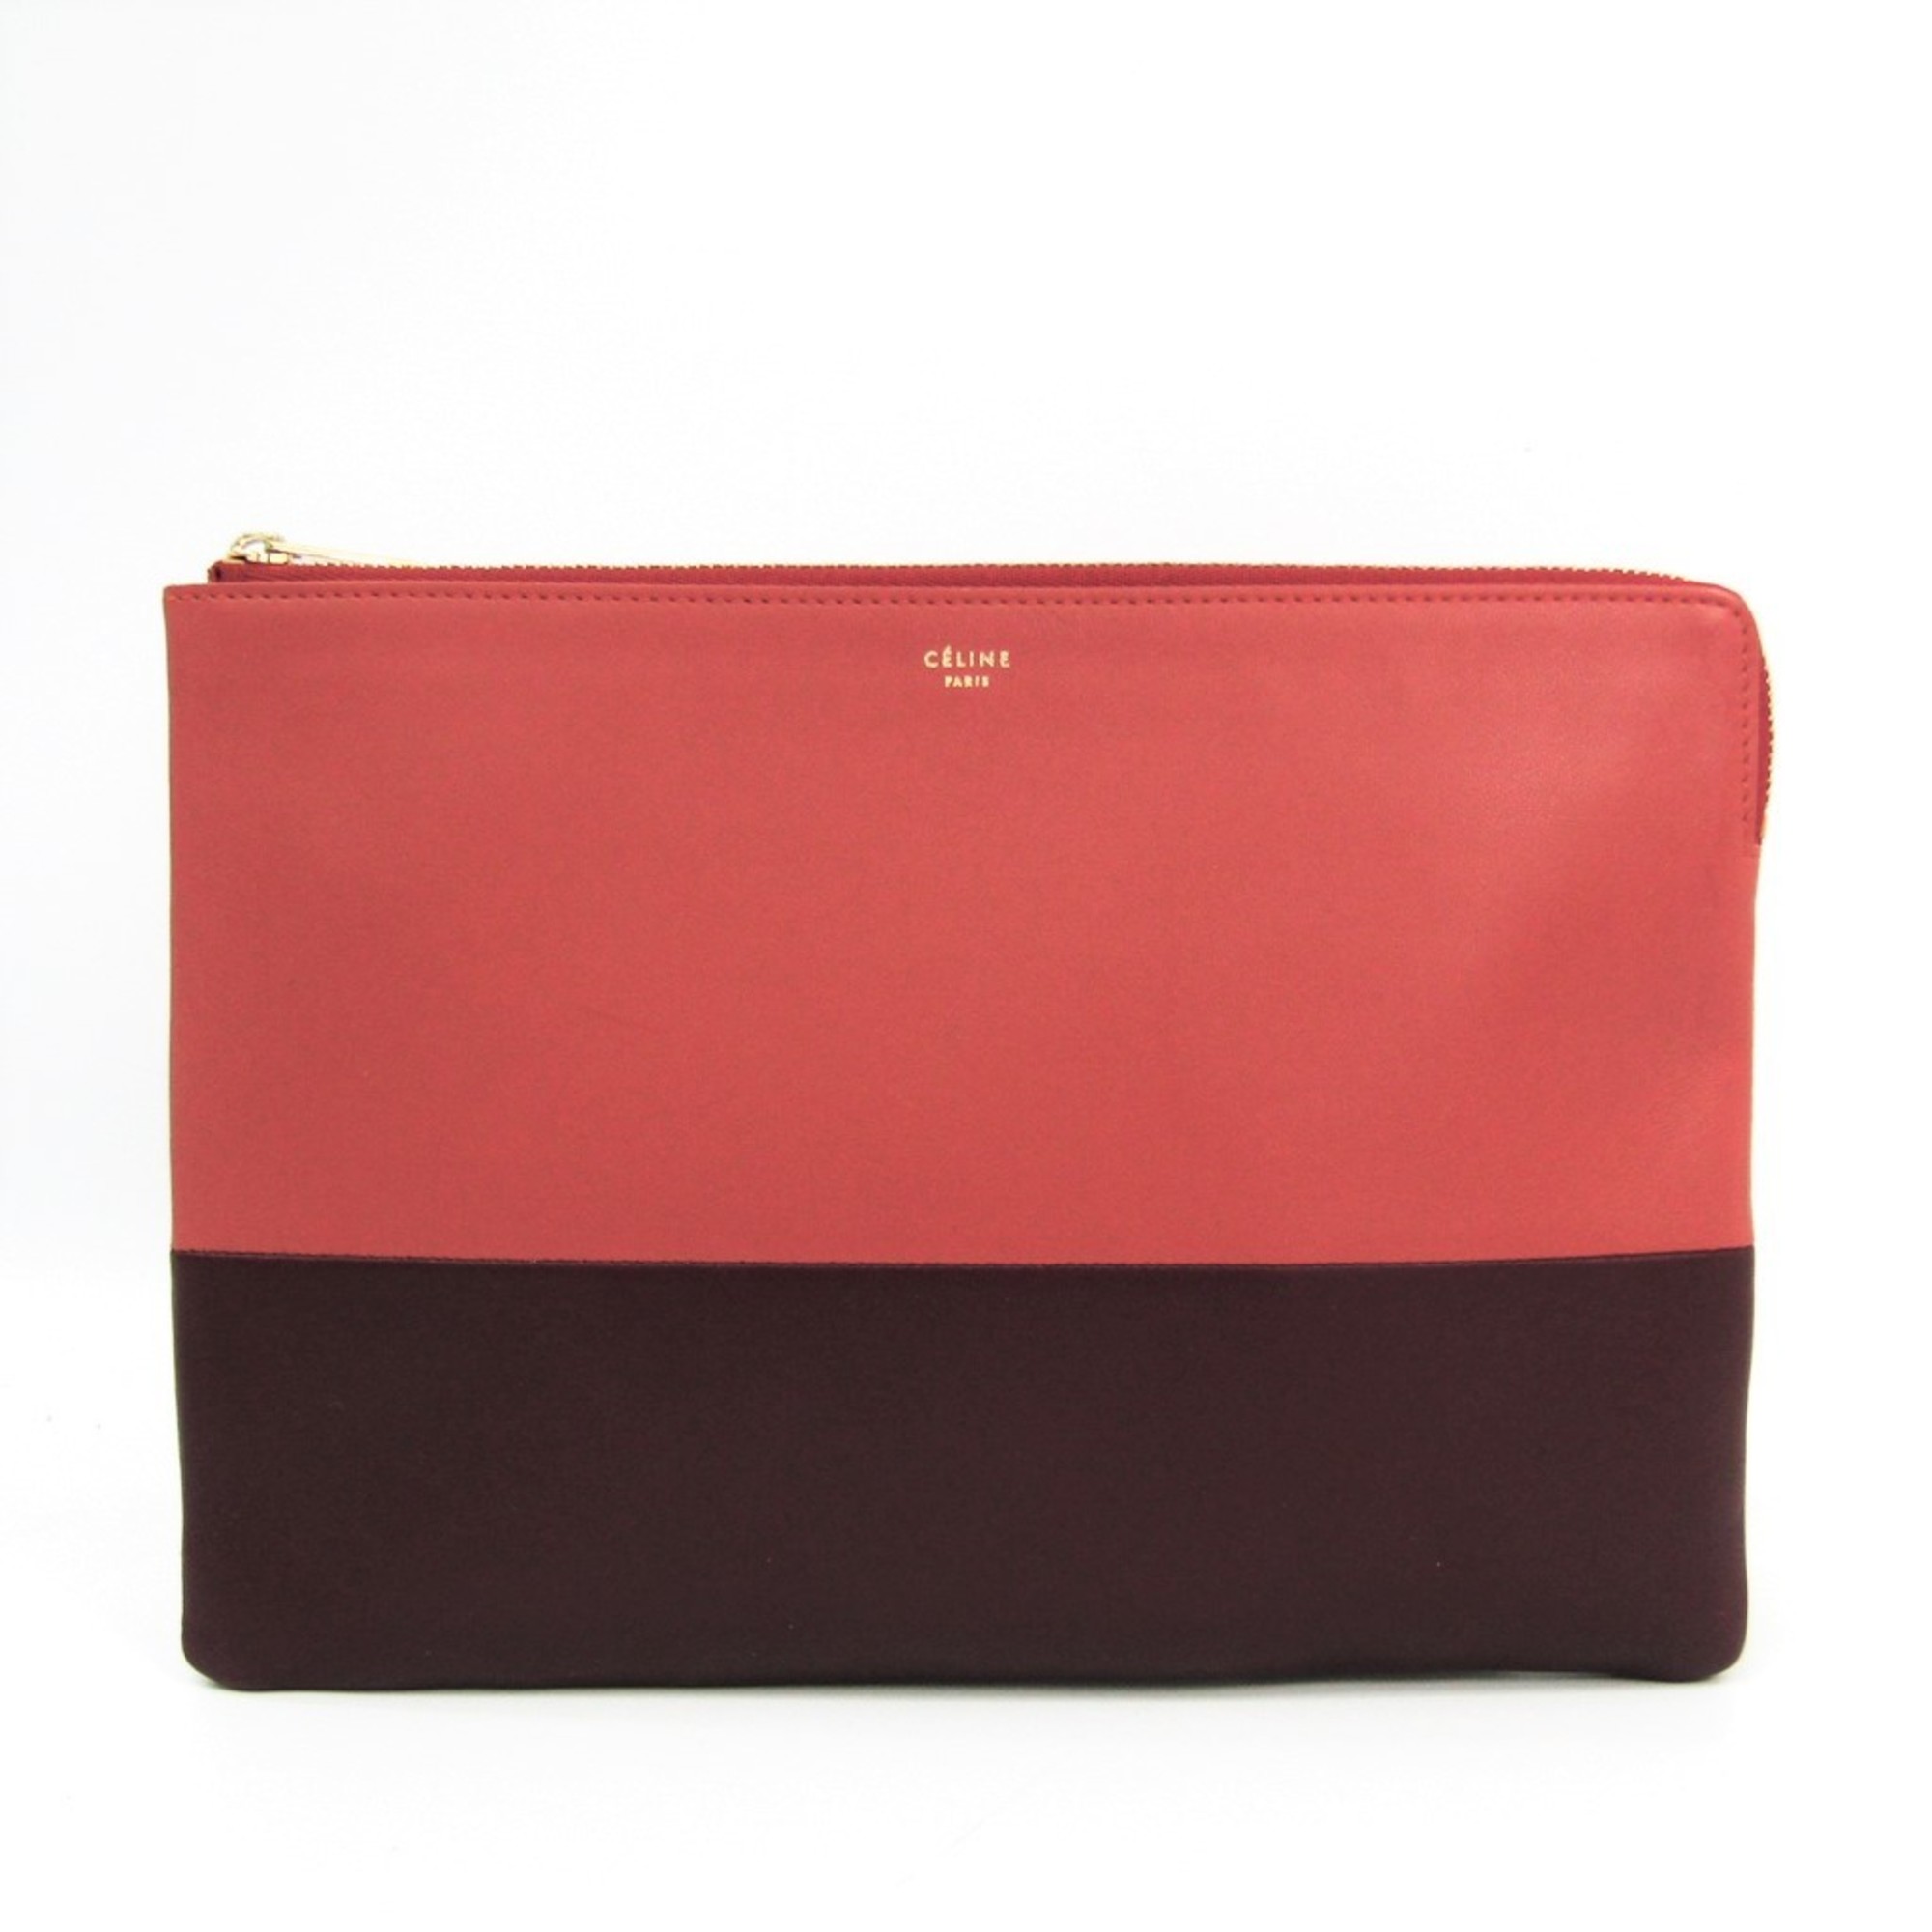 Celine 100093 Women's Leather Clutch Bag Rose Pink,Bordeaux